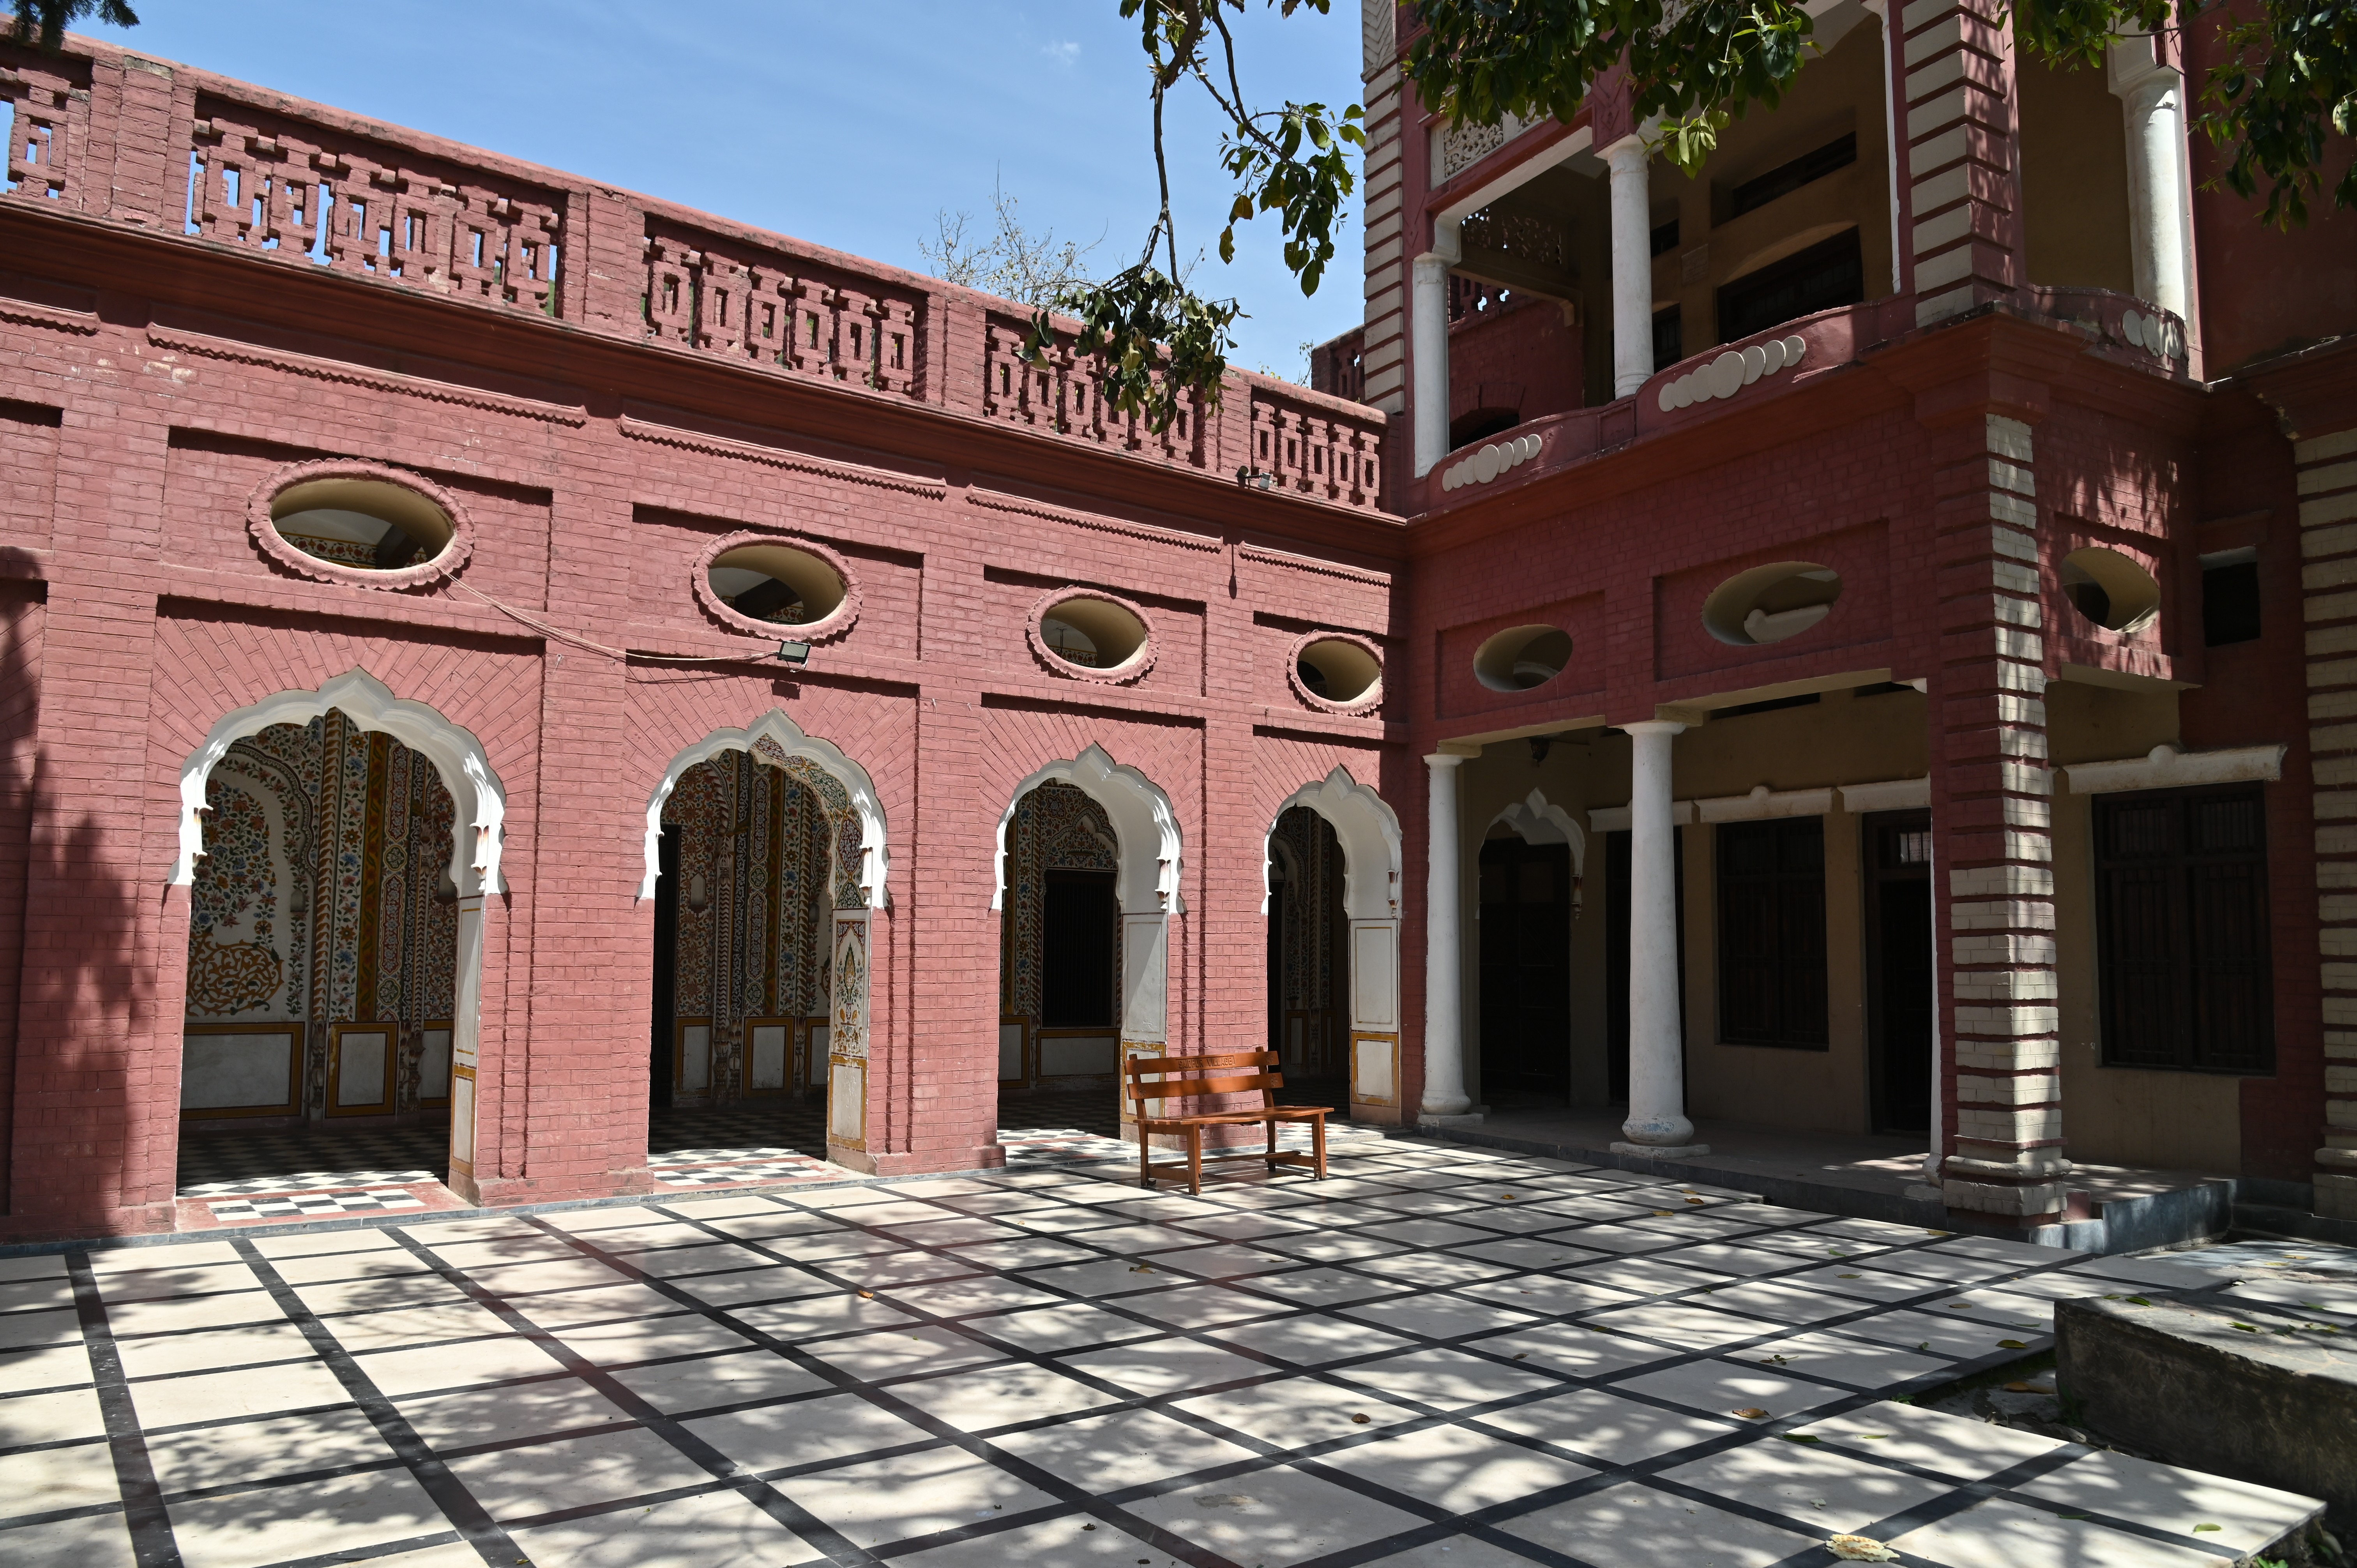 Gurdwara Singh Sabah Build in 1930 in Saidpur Village, an example of interfaith harmony